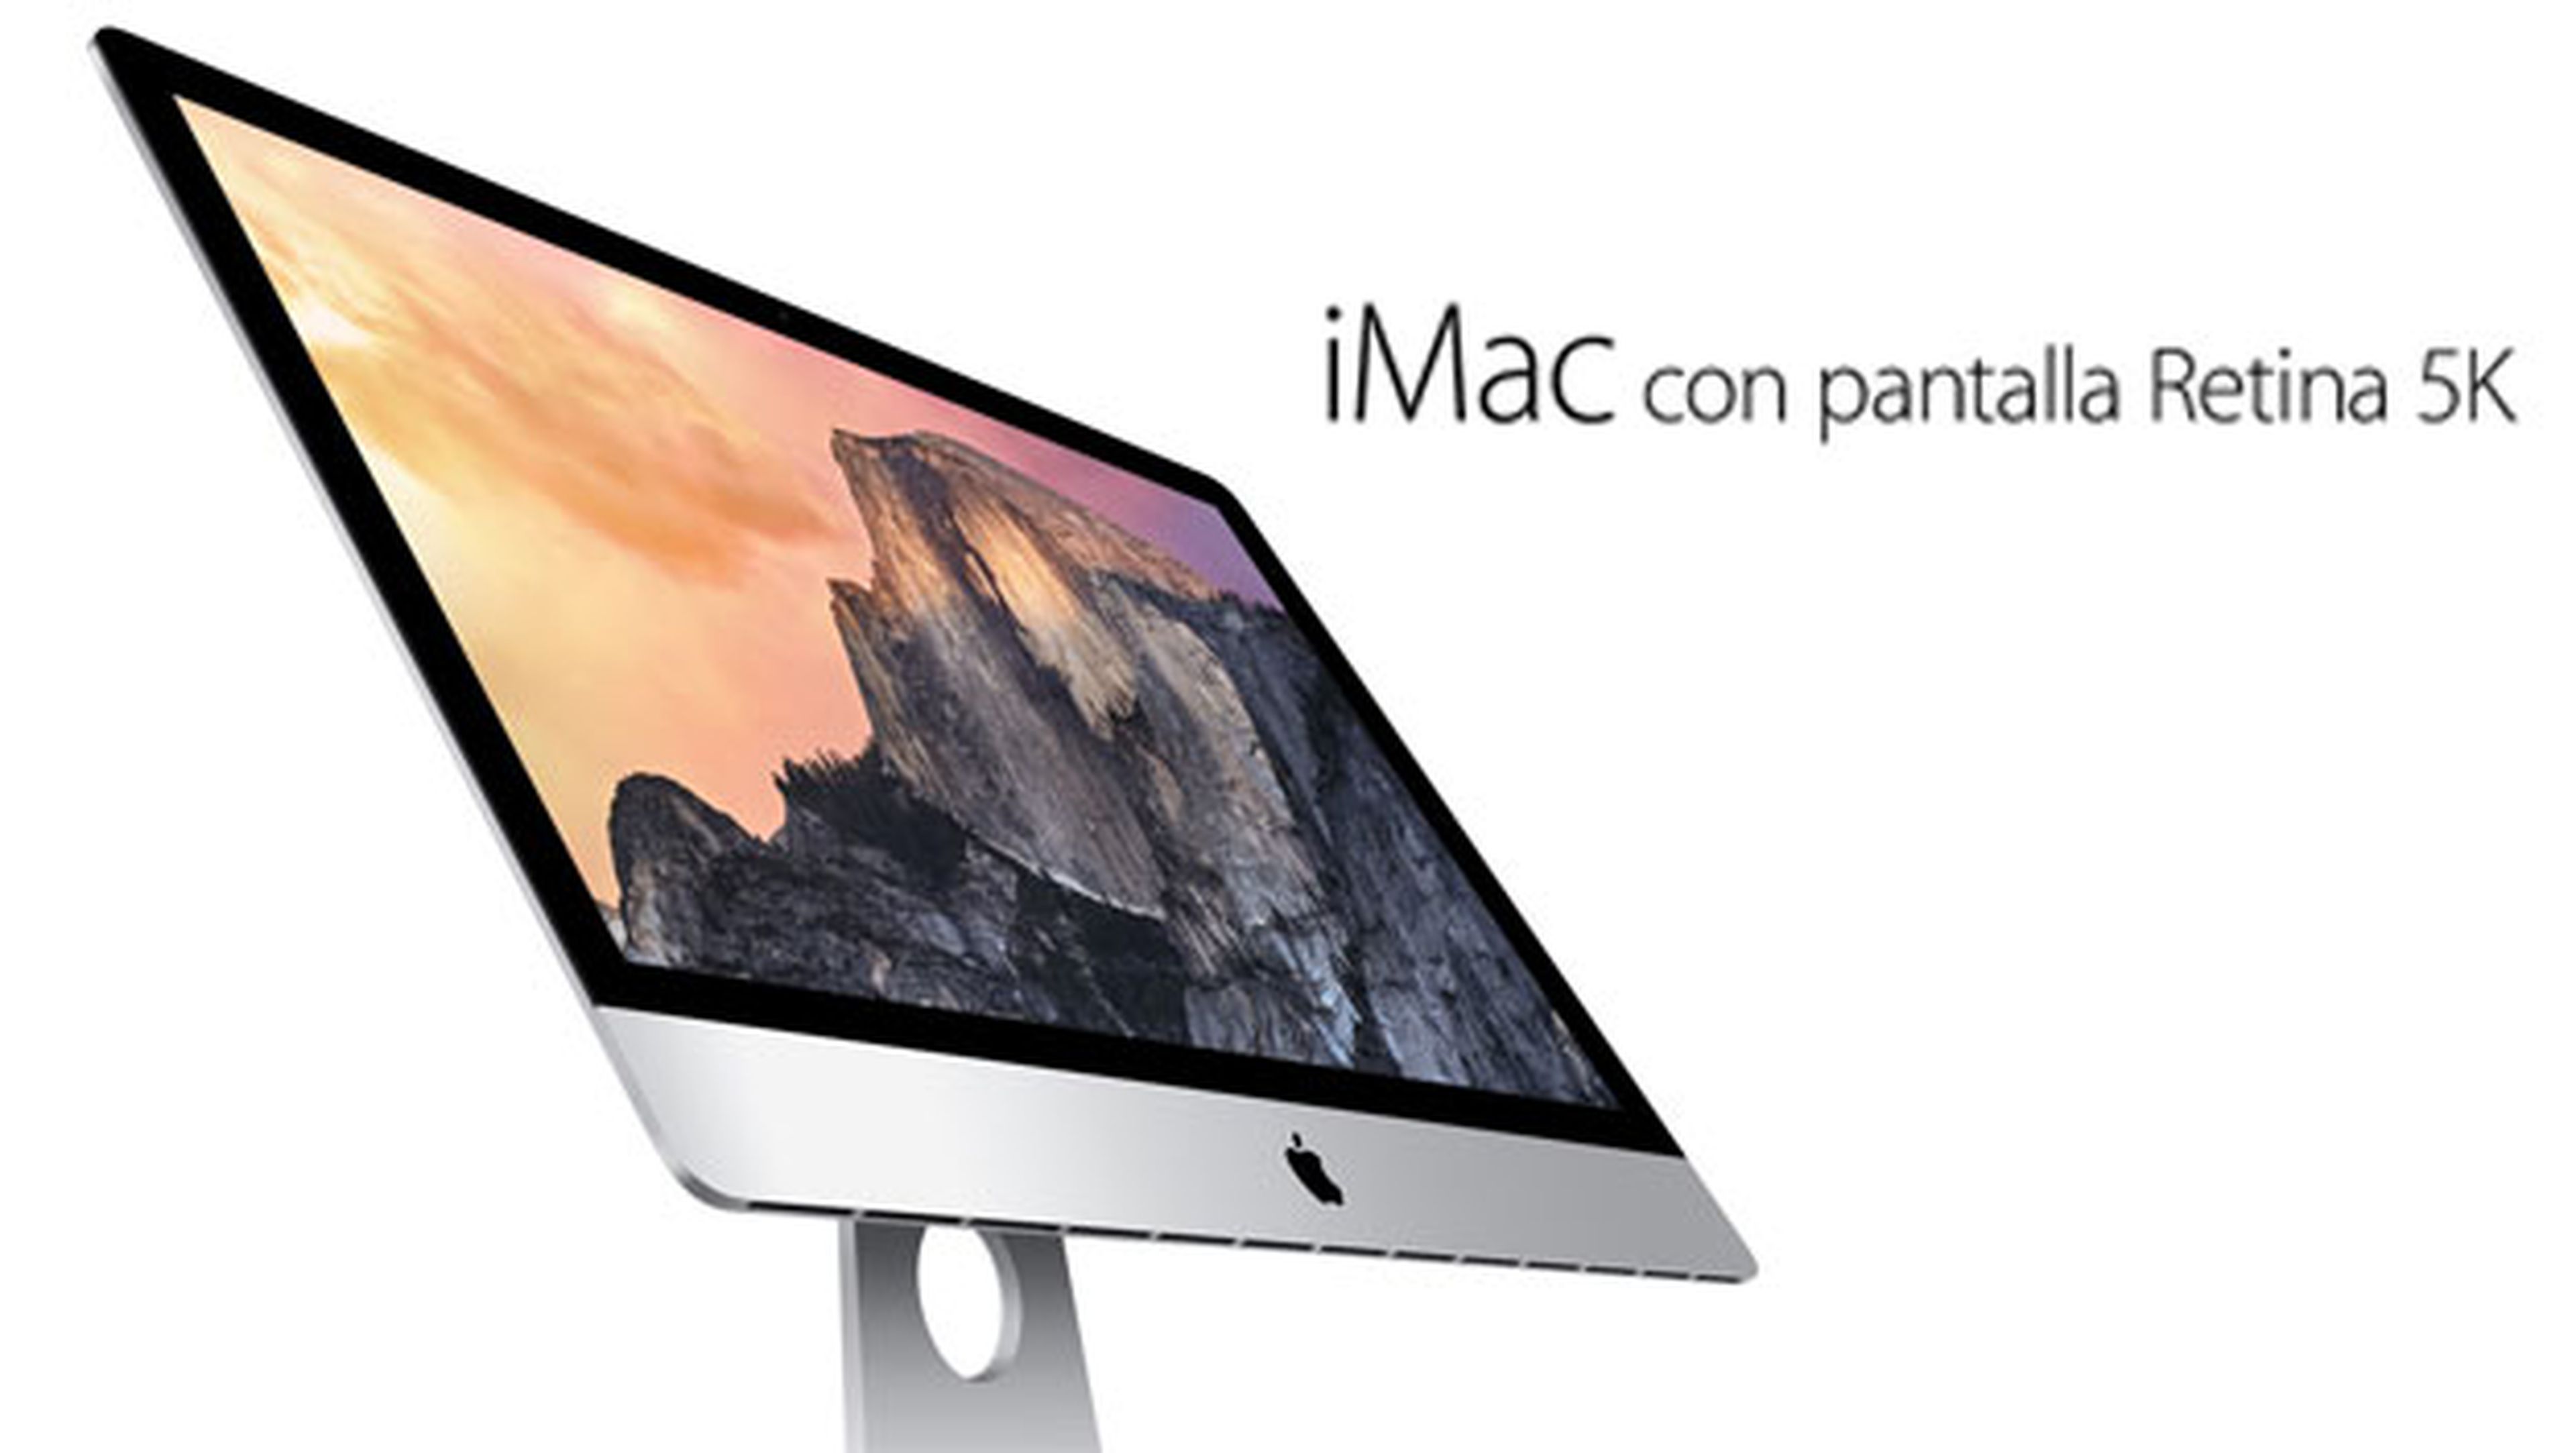 iMac con pantalla retina 5k